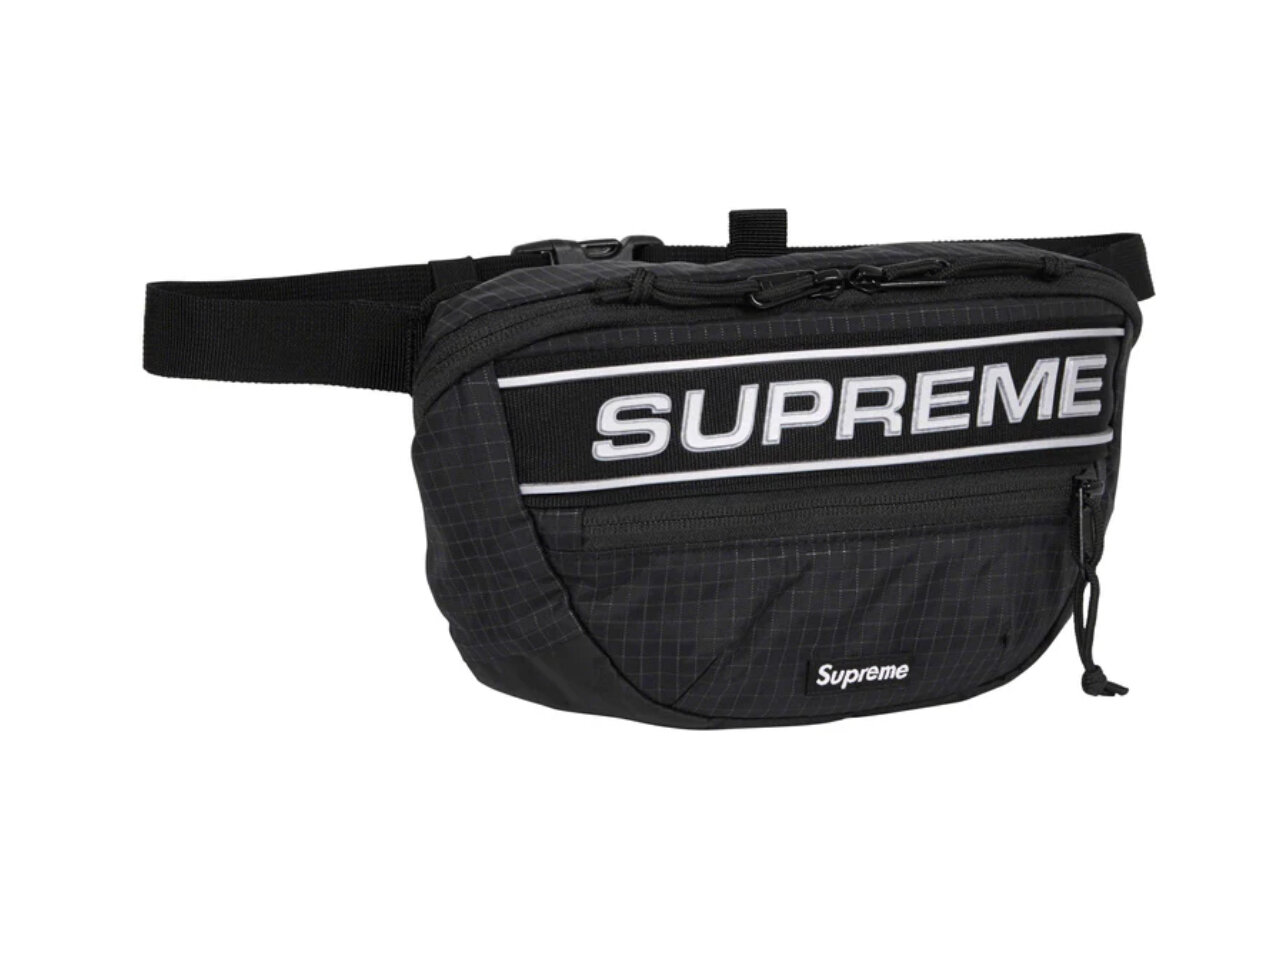 Supreme Waist Bag Black<br/>Supreme Waist Bag Black<br/>Hype6ix